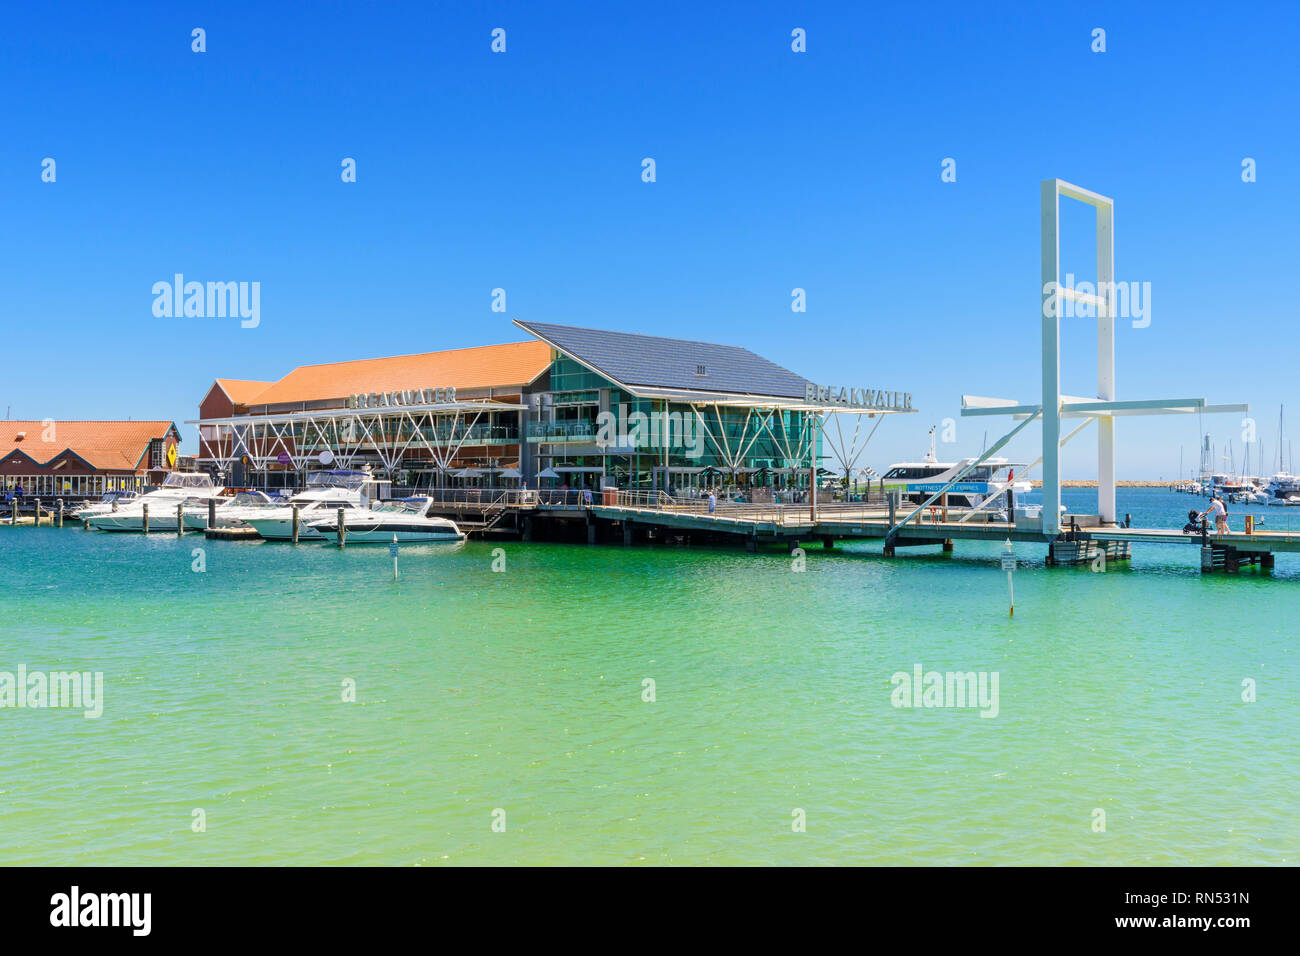 Der Wellenbrecher Tavern Sorrento Quay, Hillarys Boat Harbour Hillarys, Western Australia Stockfoto